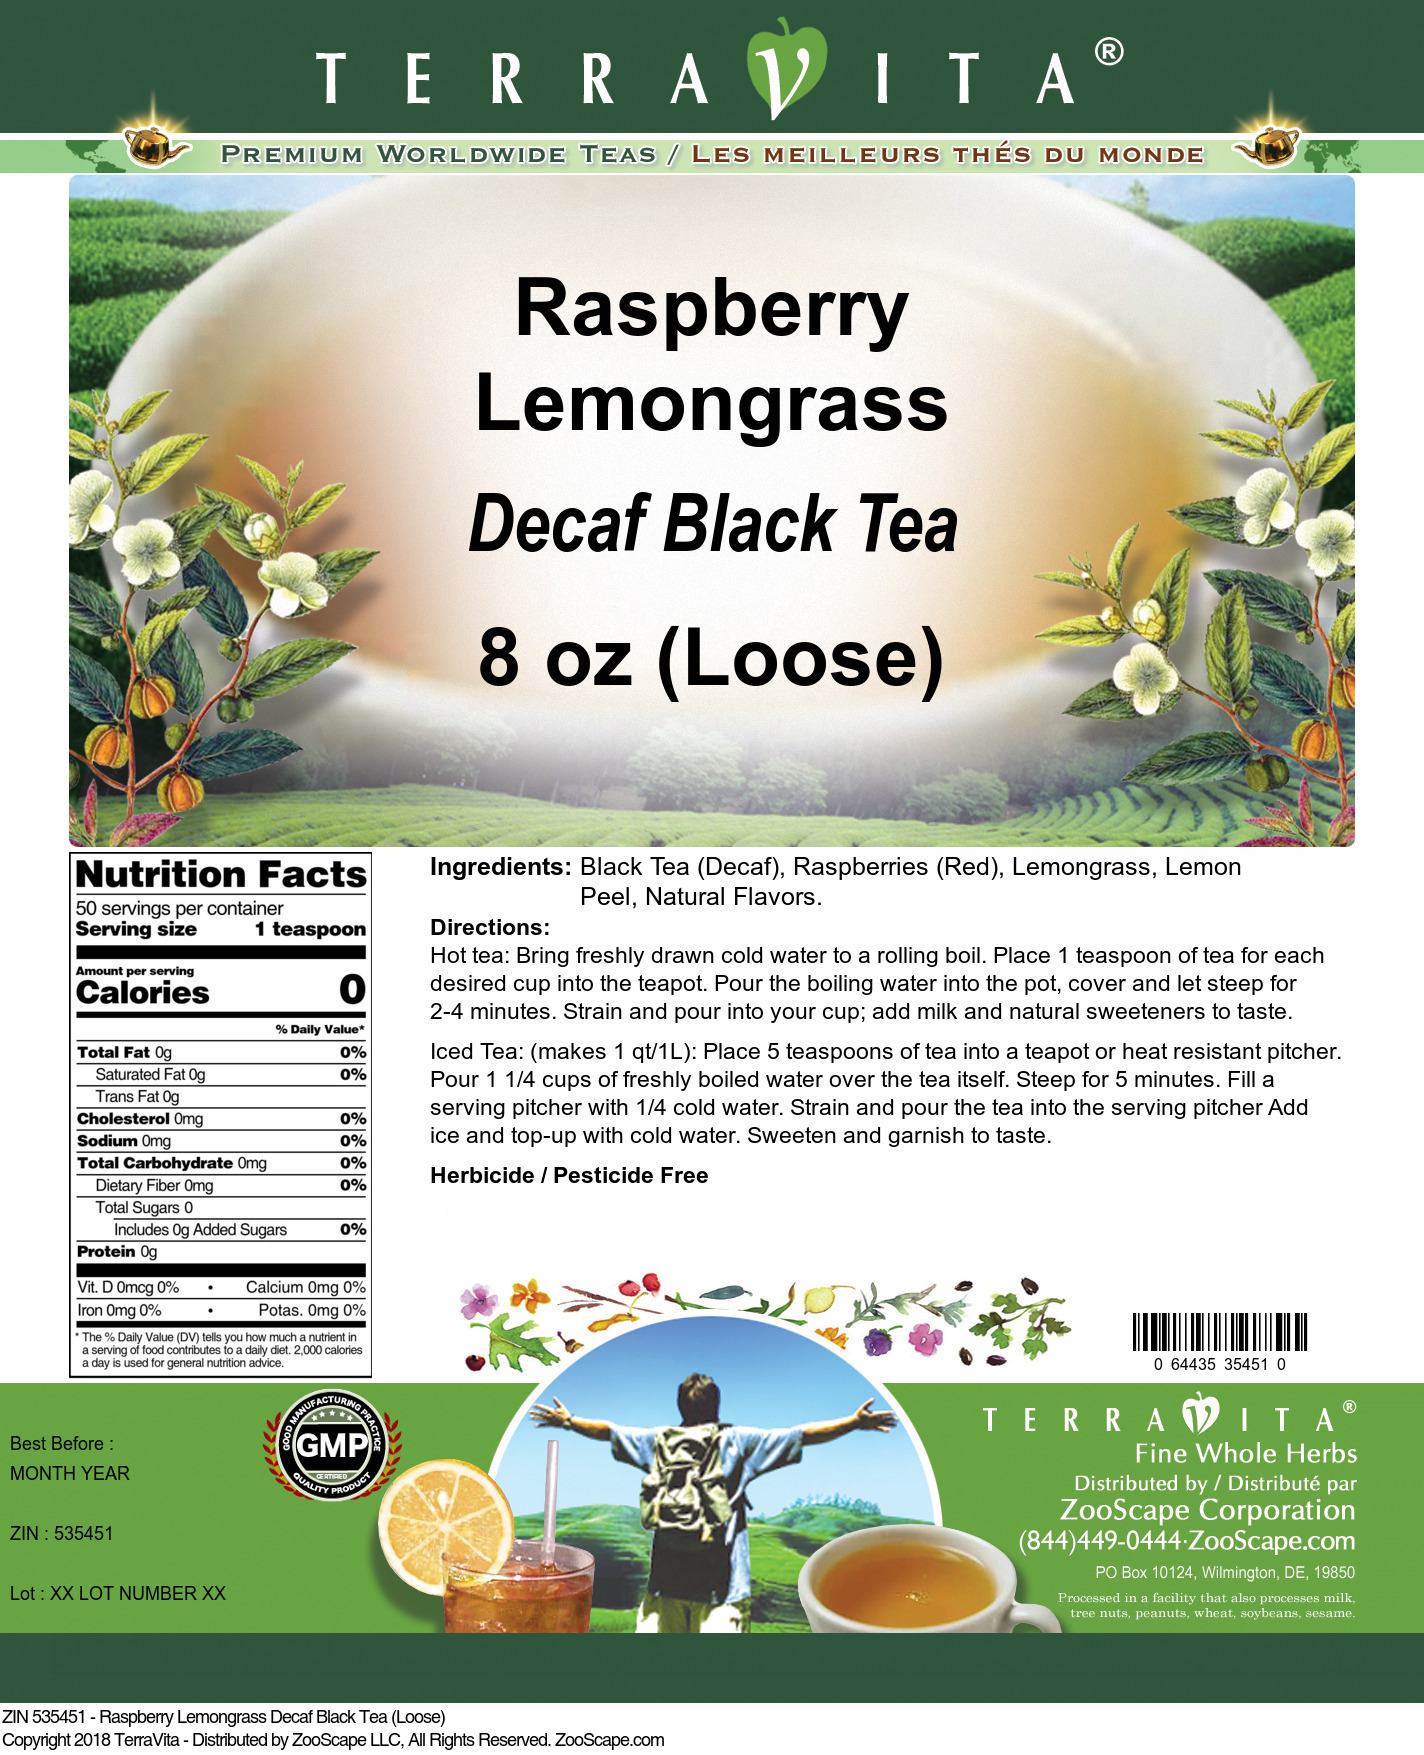 Raspberry Lemongrass Decaf Black Tea (Loose) - Label